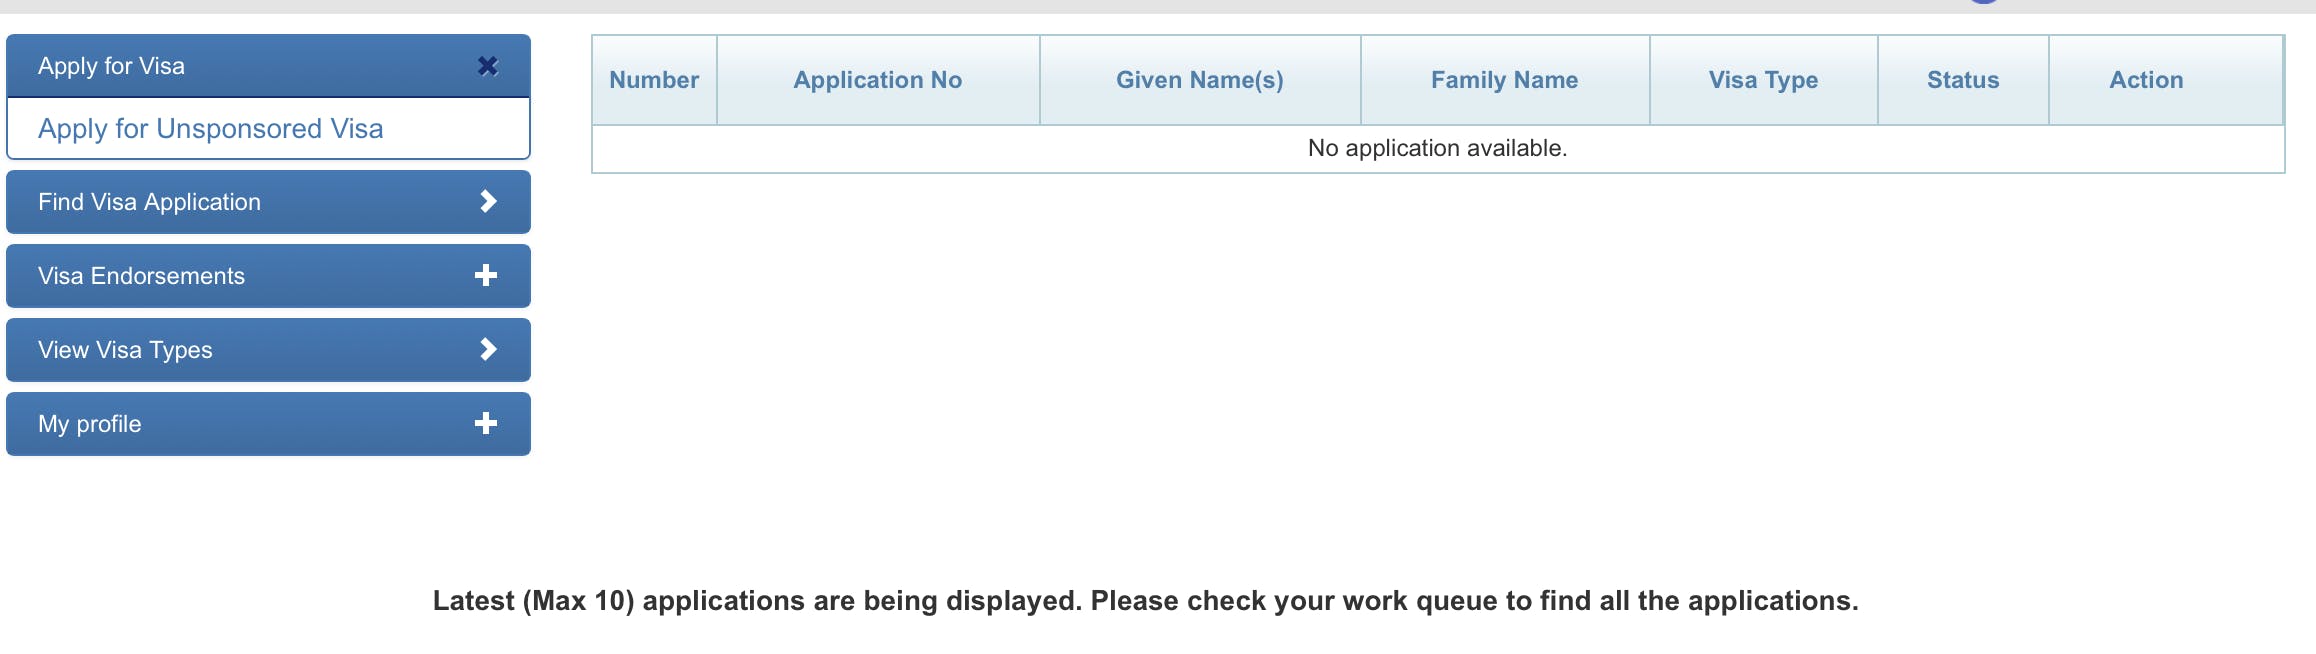 Online application process for the Oman e visa